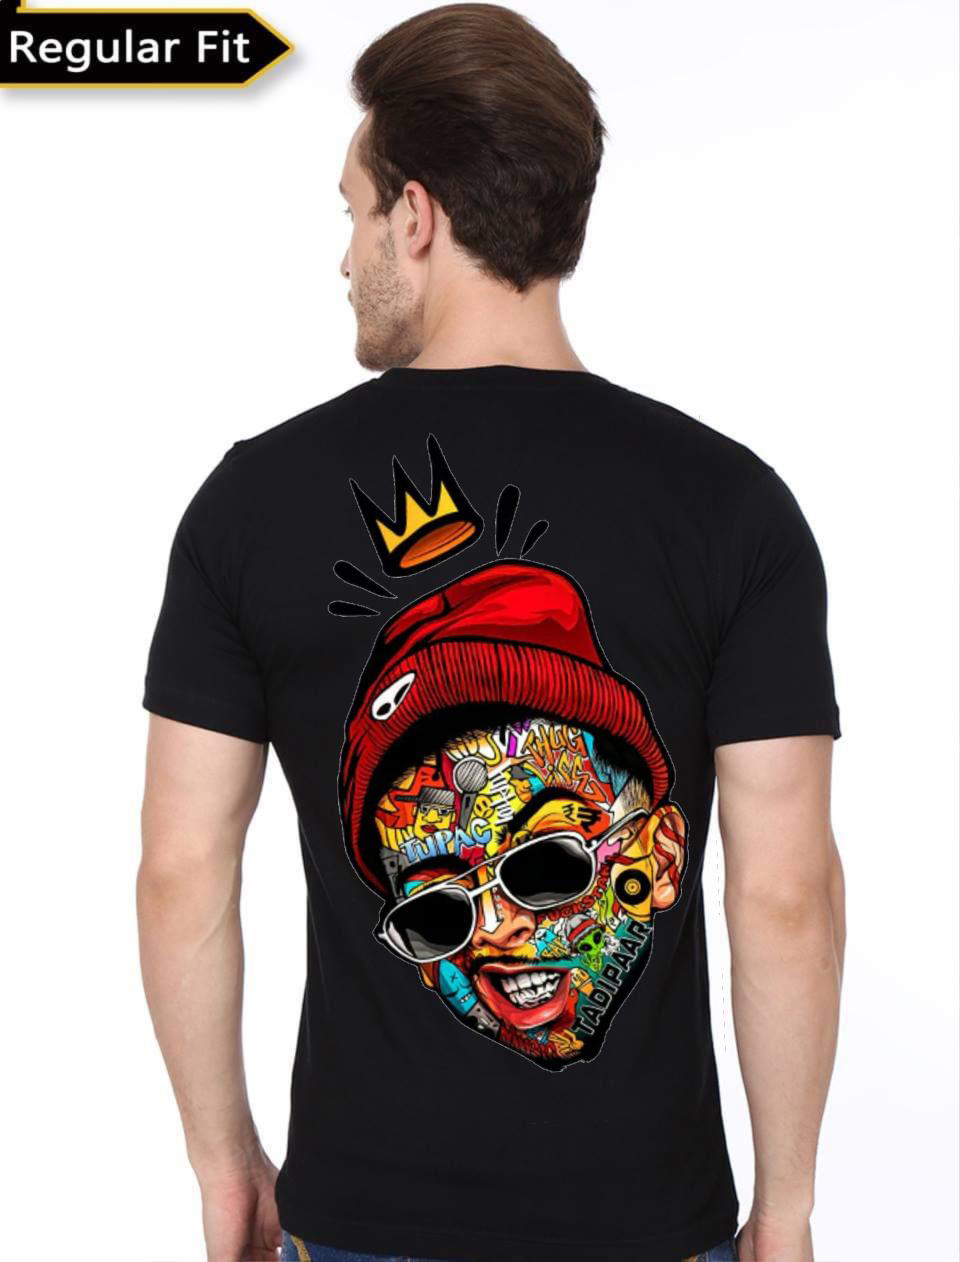 MC STAN T - SHIRT  T shirts for women, Online store, Tops